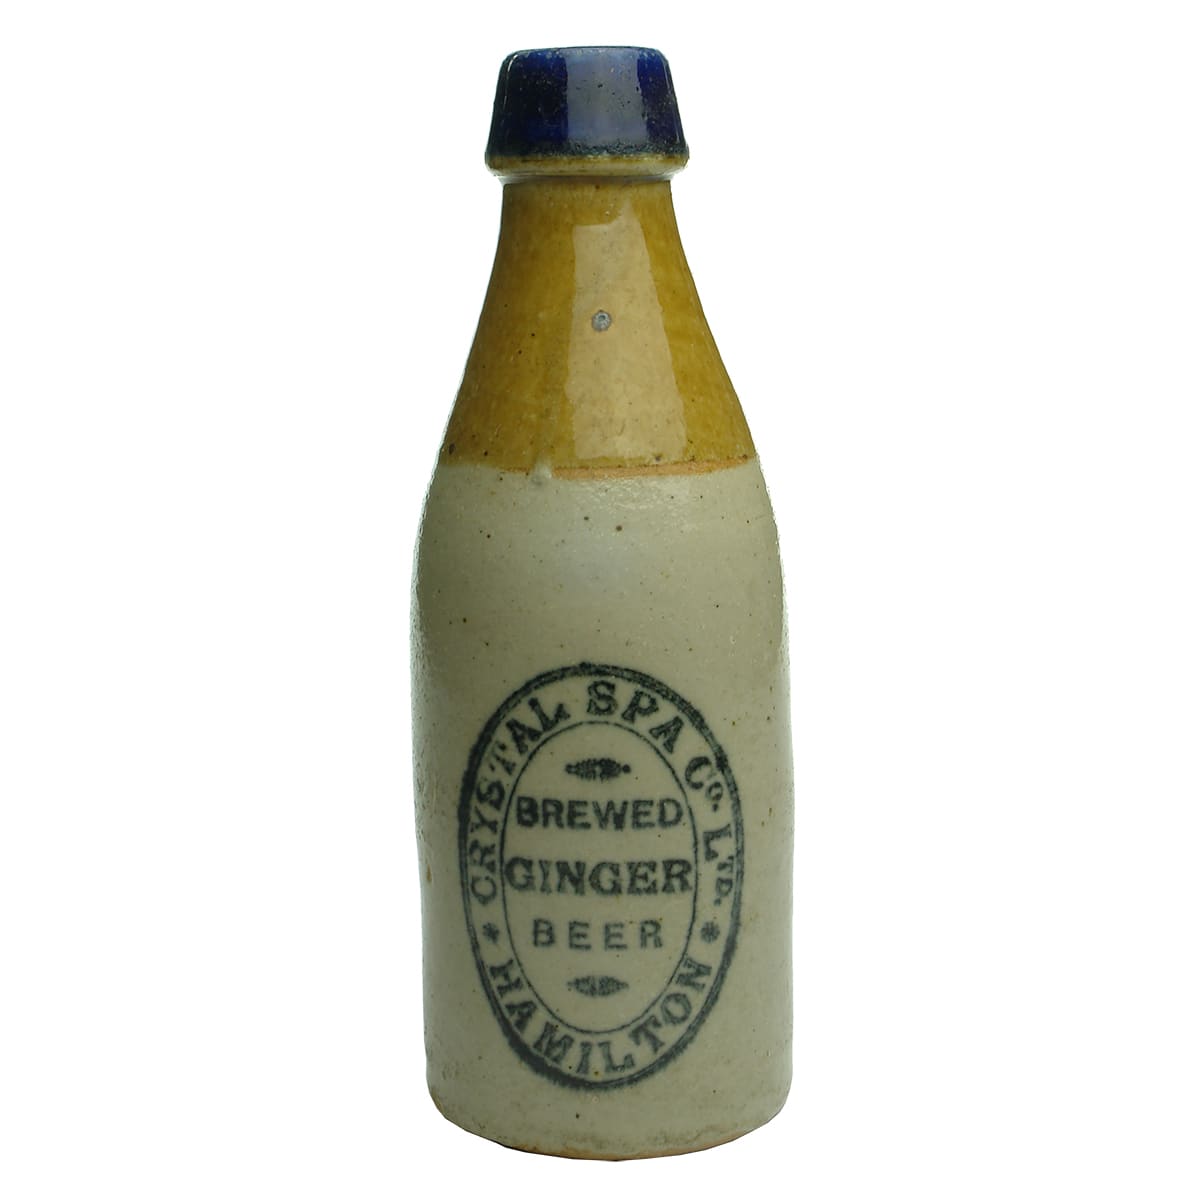 Crystal Spa Co. Ltd., Hamilton tri-colour ginger beer.